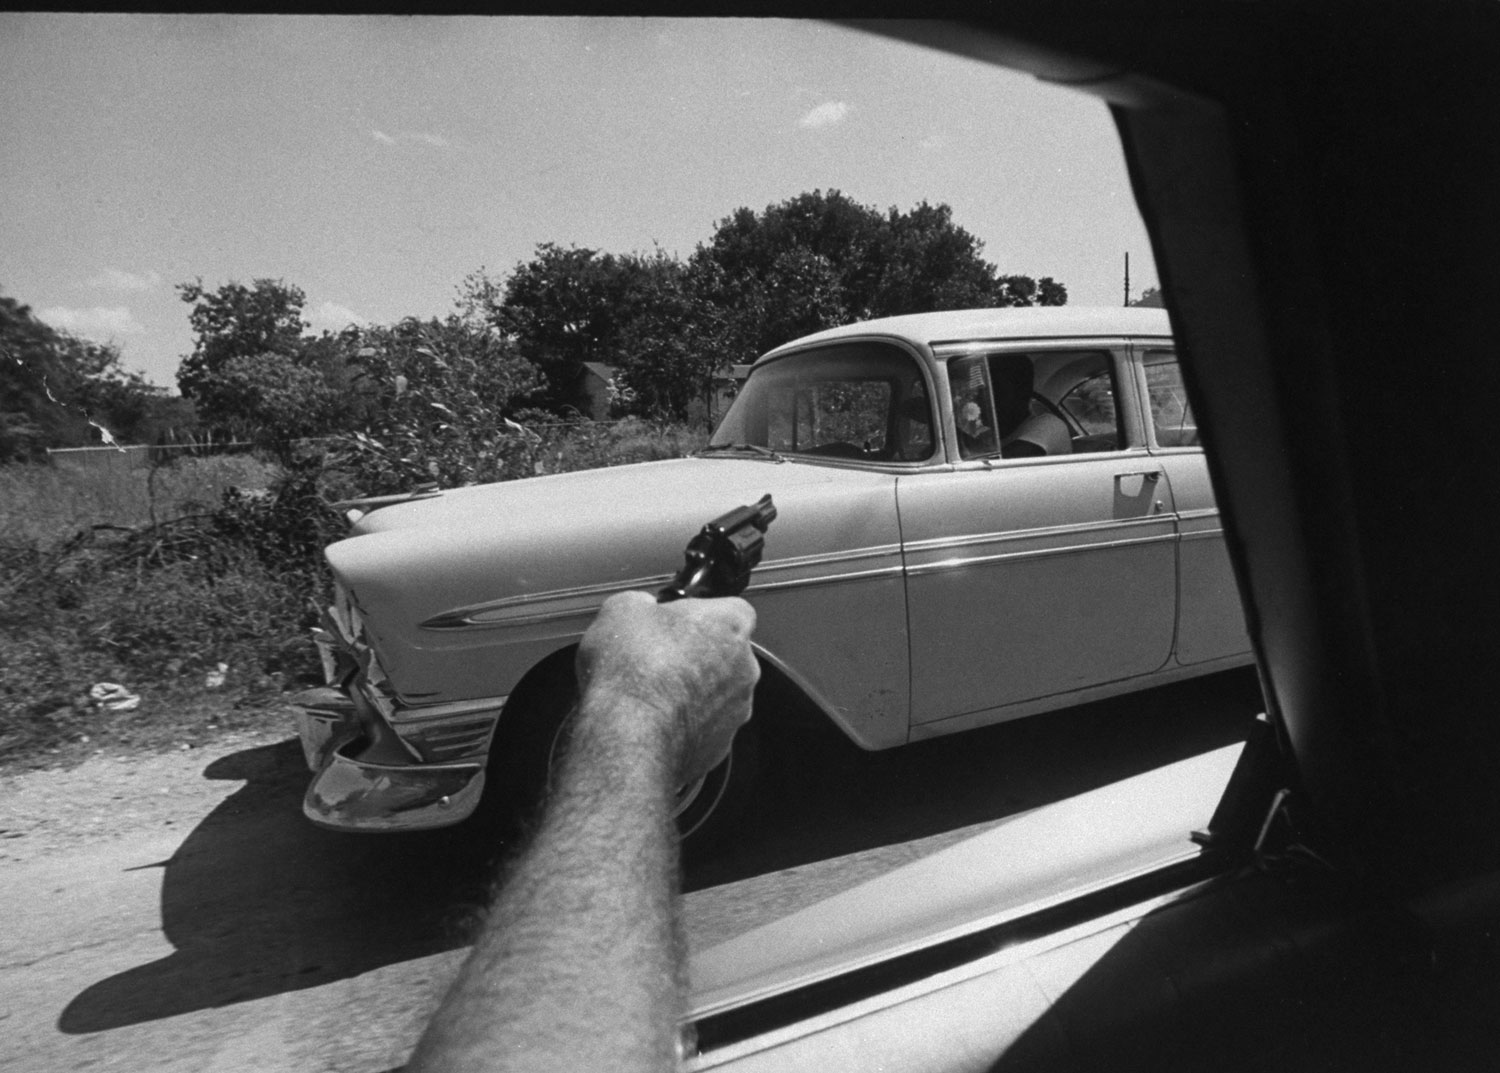 A U.S. Customs agent points his gun at a car suspected of transporting marijuana, 1969.